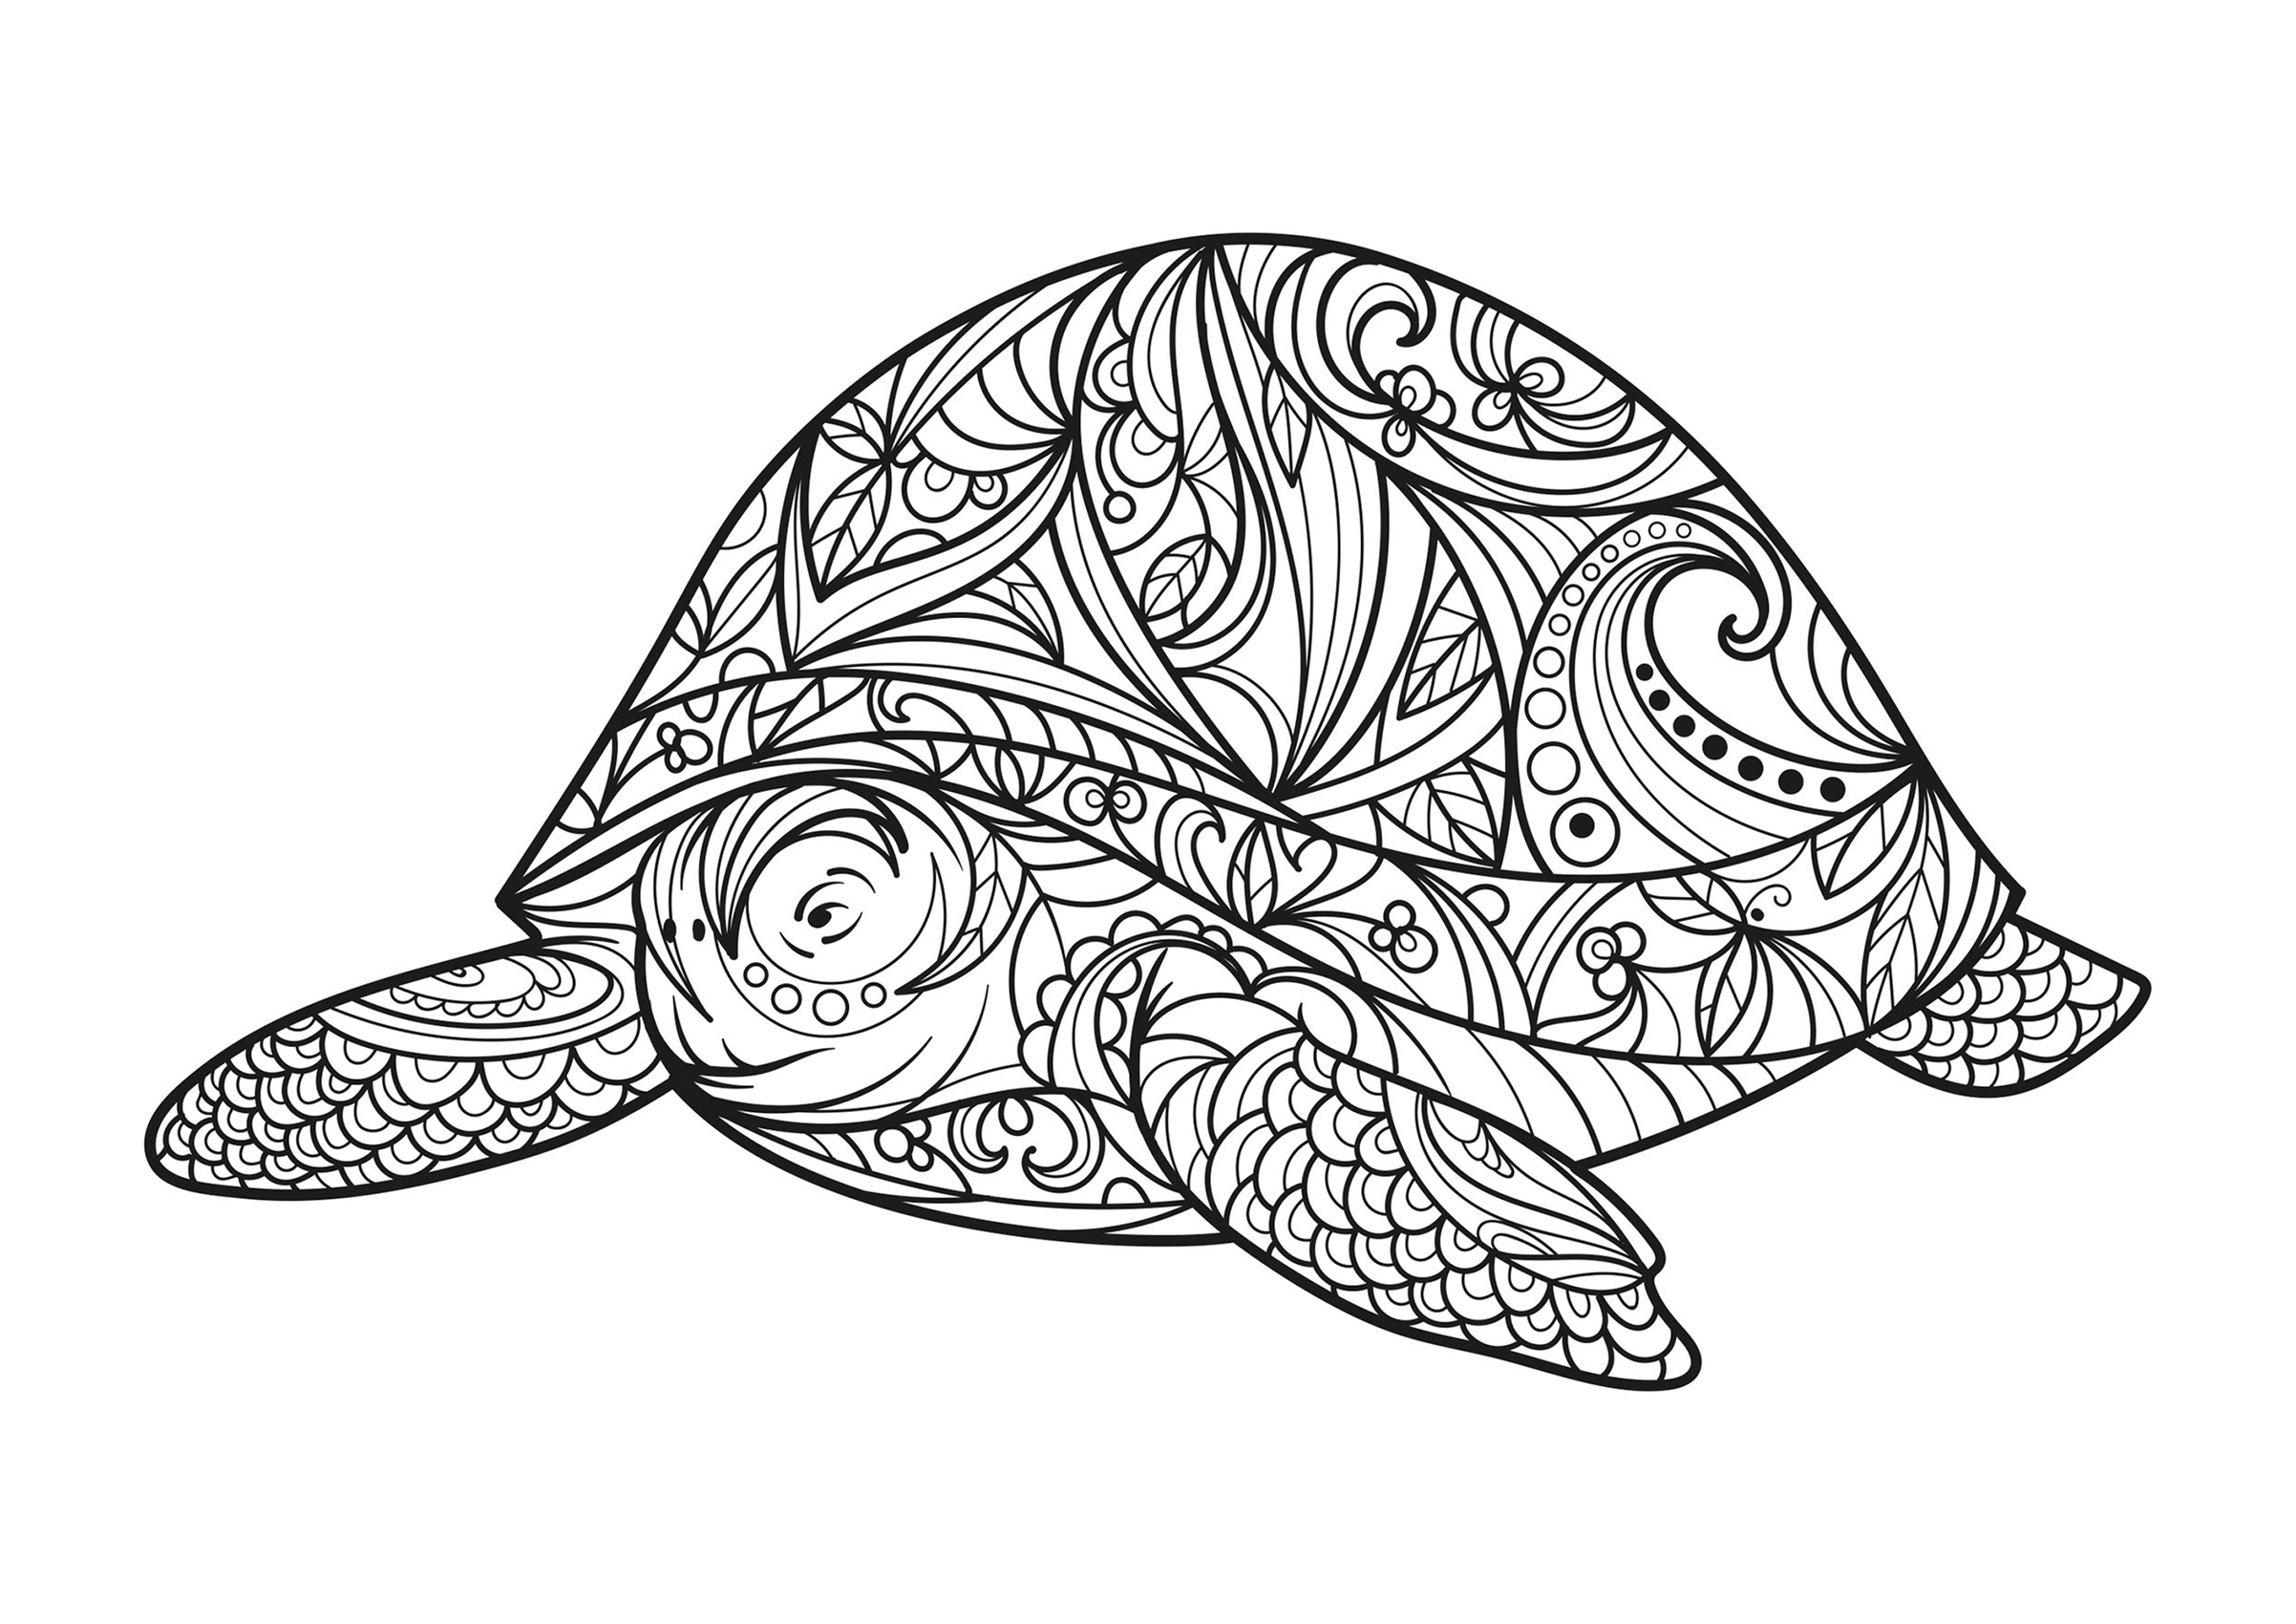 Big turtle full of various patterns